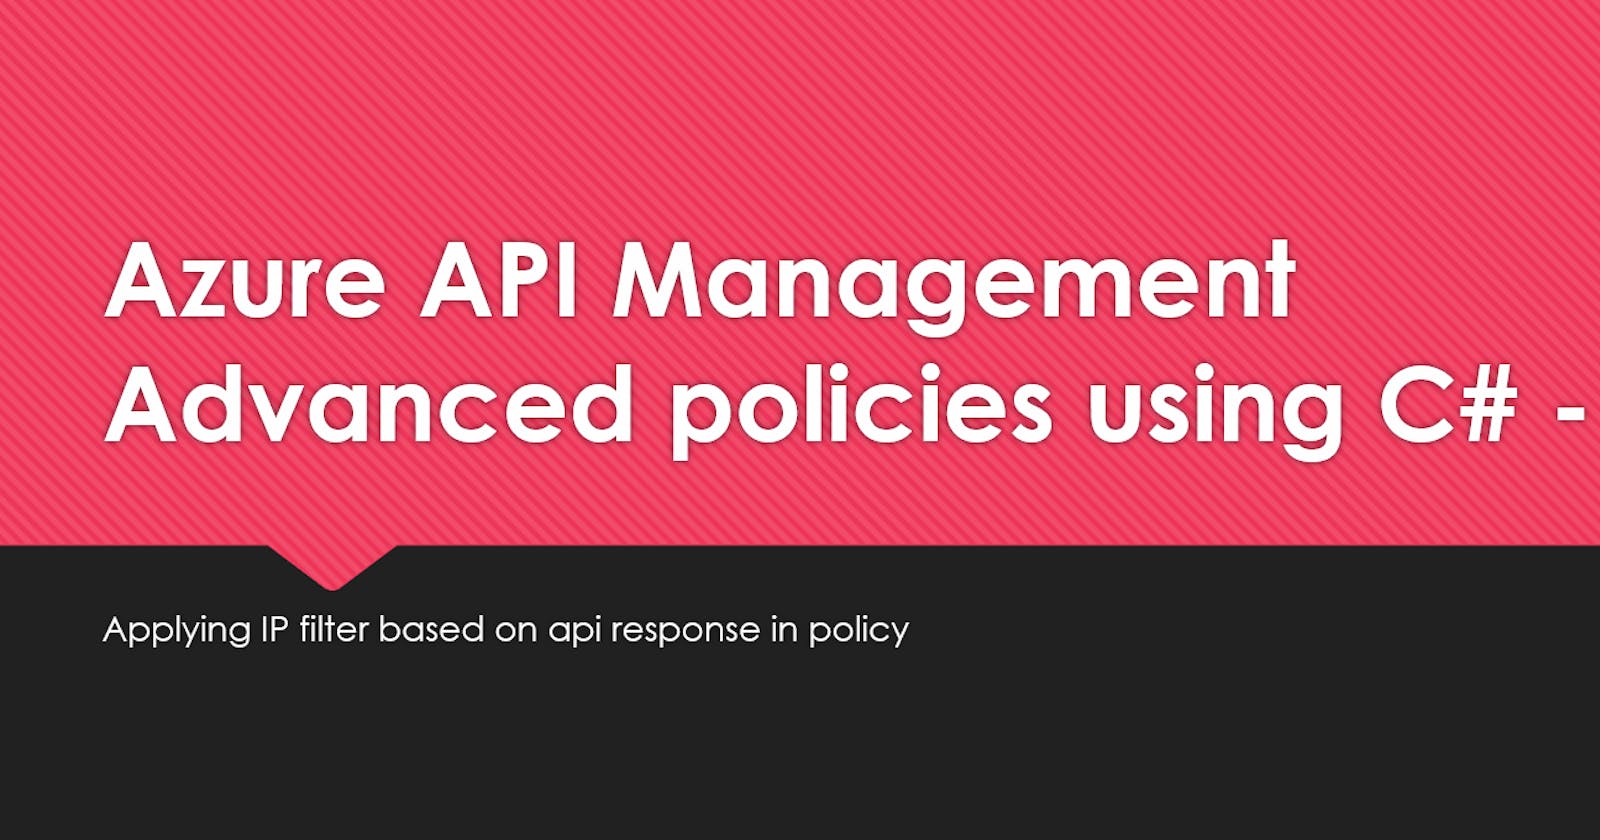 Azure API Management Advanced policies using C# - I